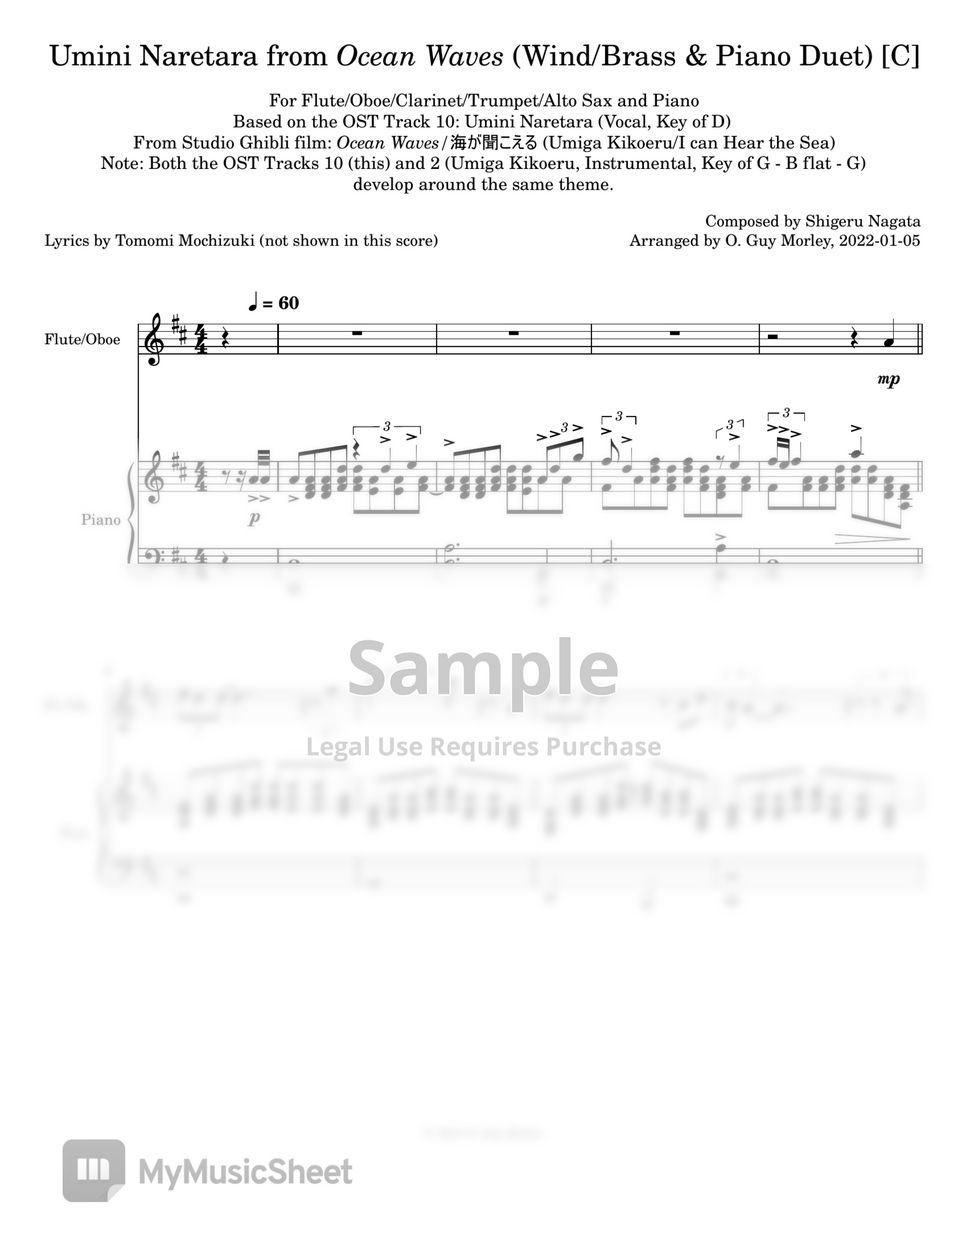 Ocean Waves/Umiga Kikoeru - Umini Naretara (Duet: Instrument/Voice + Piano) by O. Guy Morley